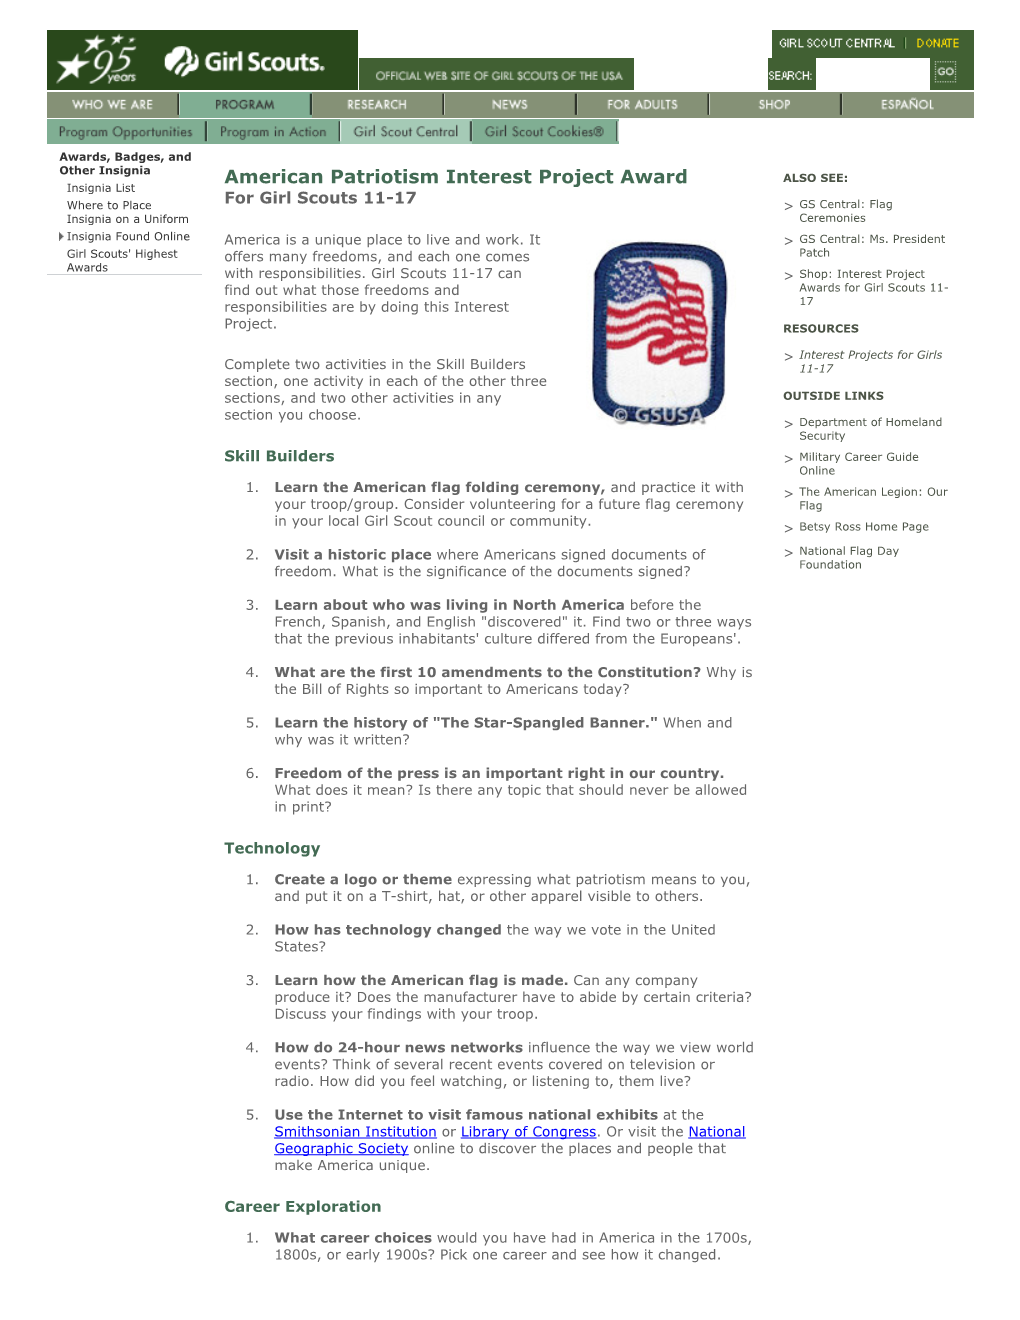 American Patriotism Interest Project Award